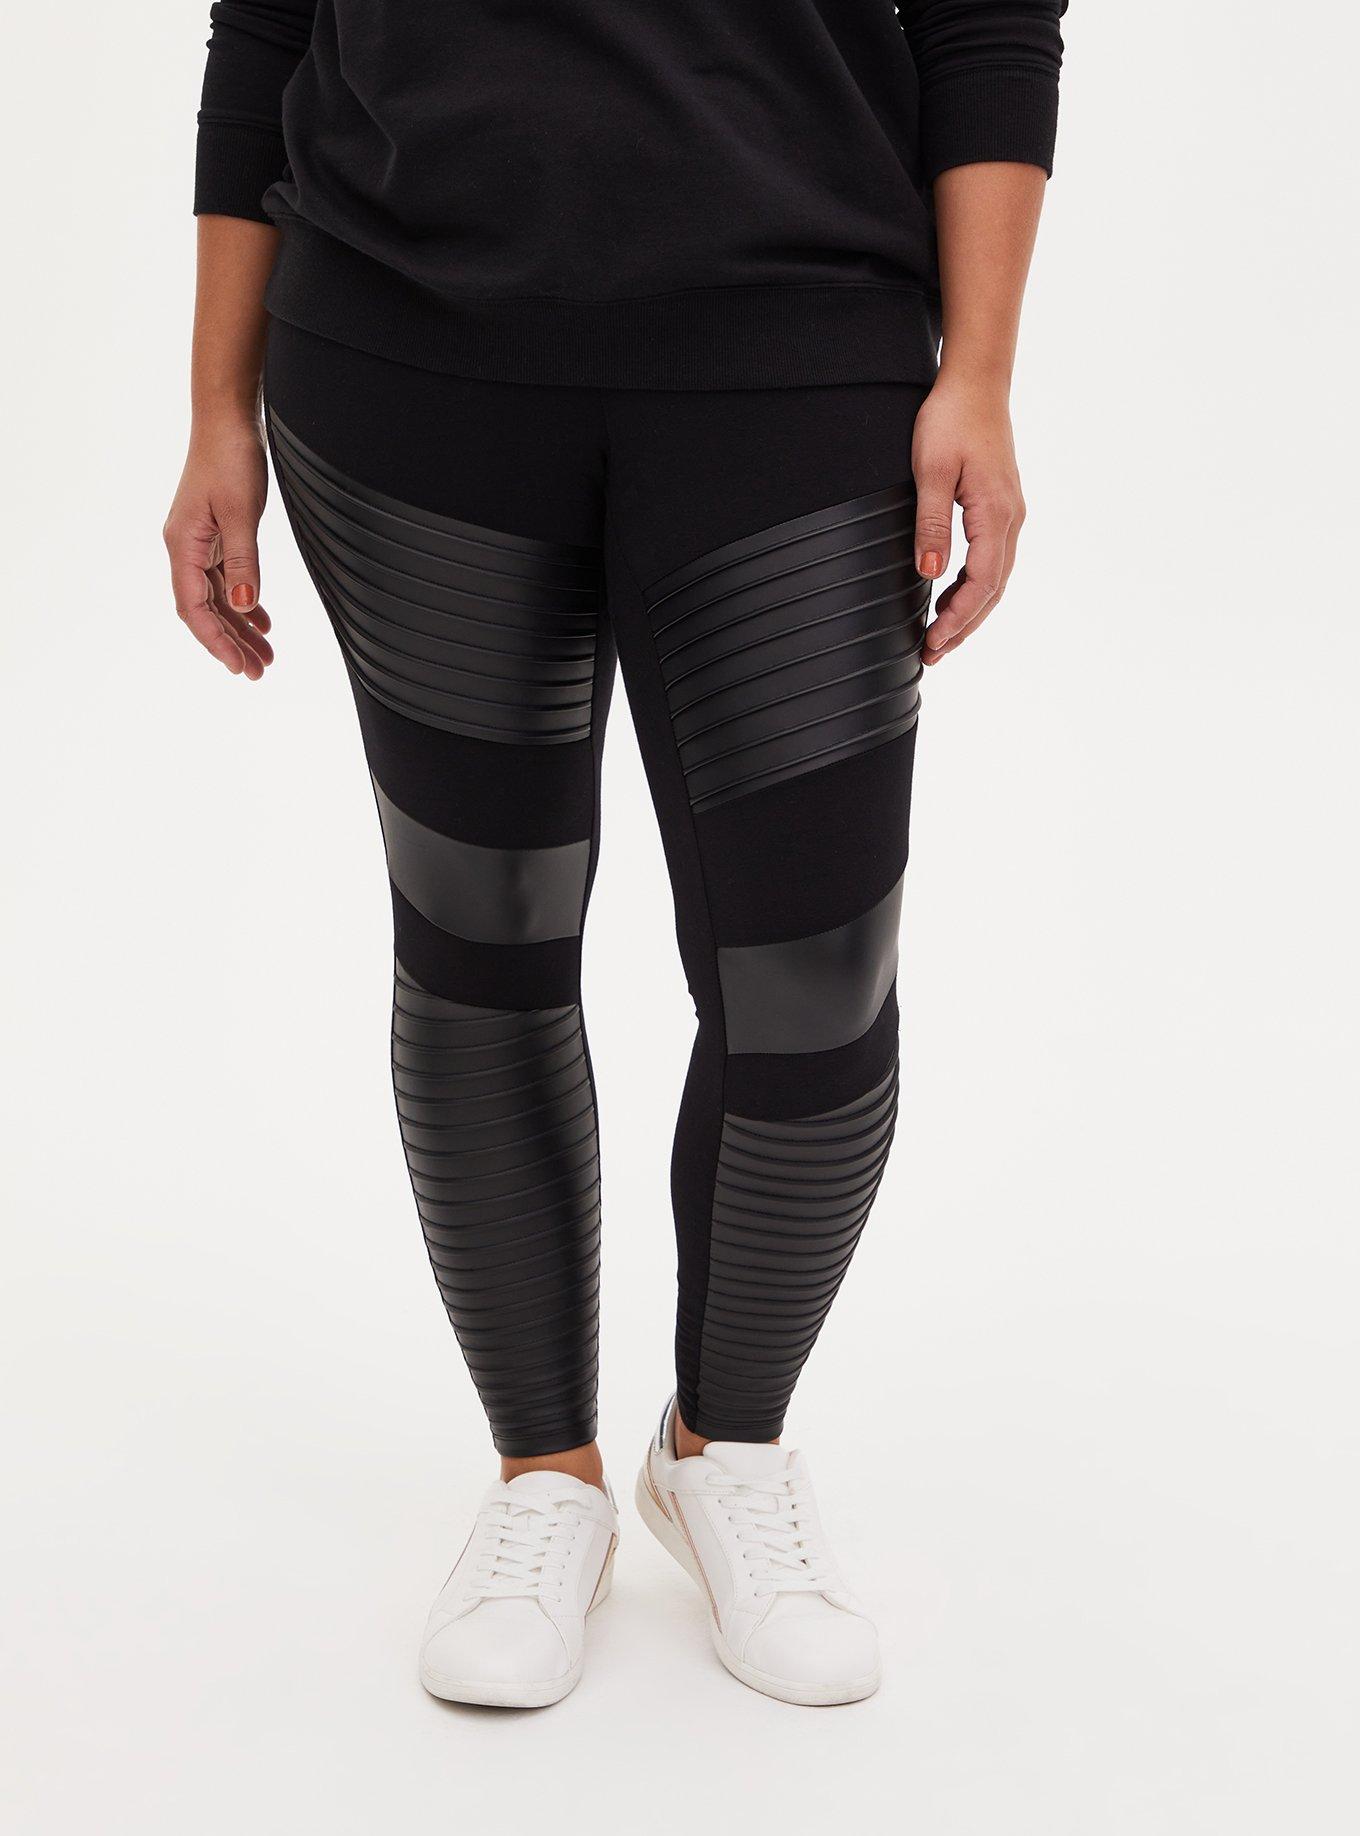 Torrid Black Platinum Leggings - Sequin Front / Smooth Back - New - Size 3  / 3X